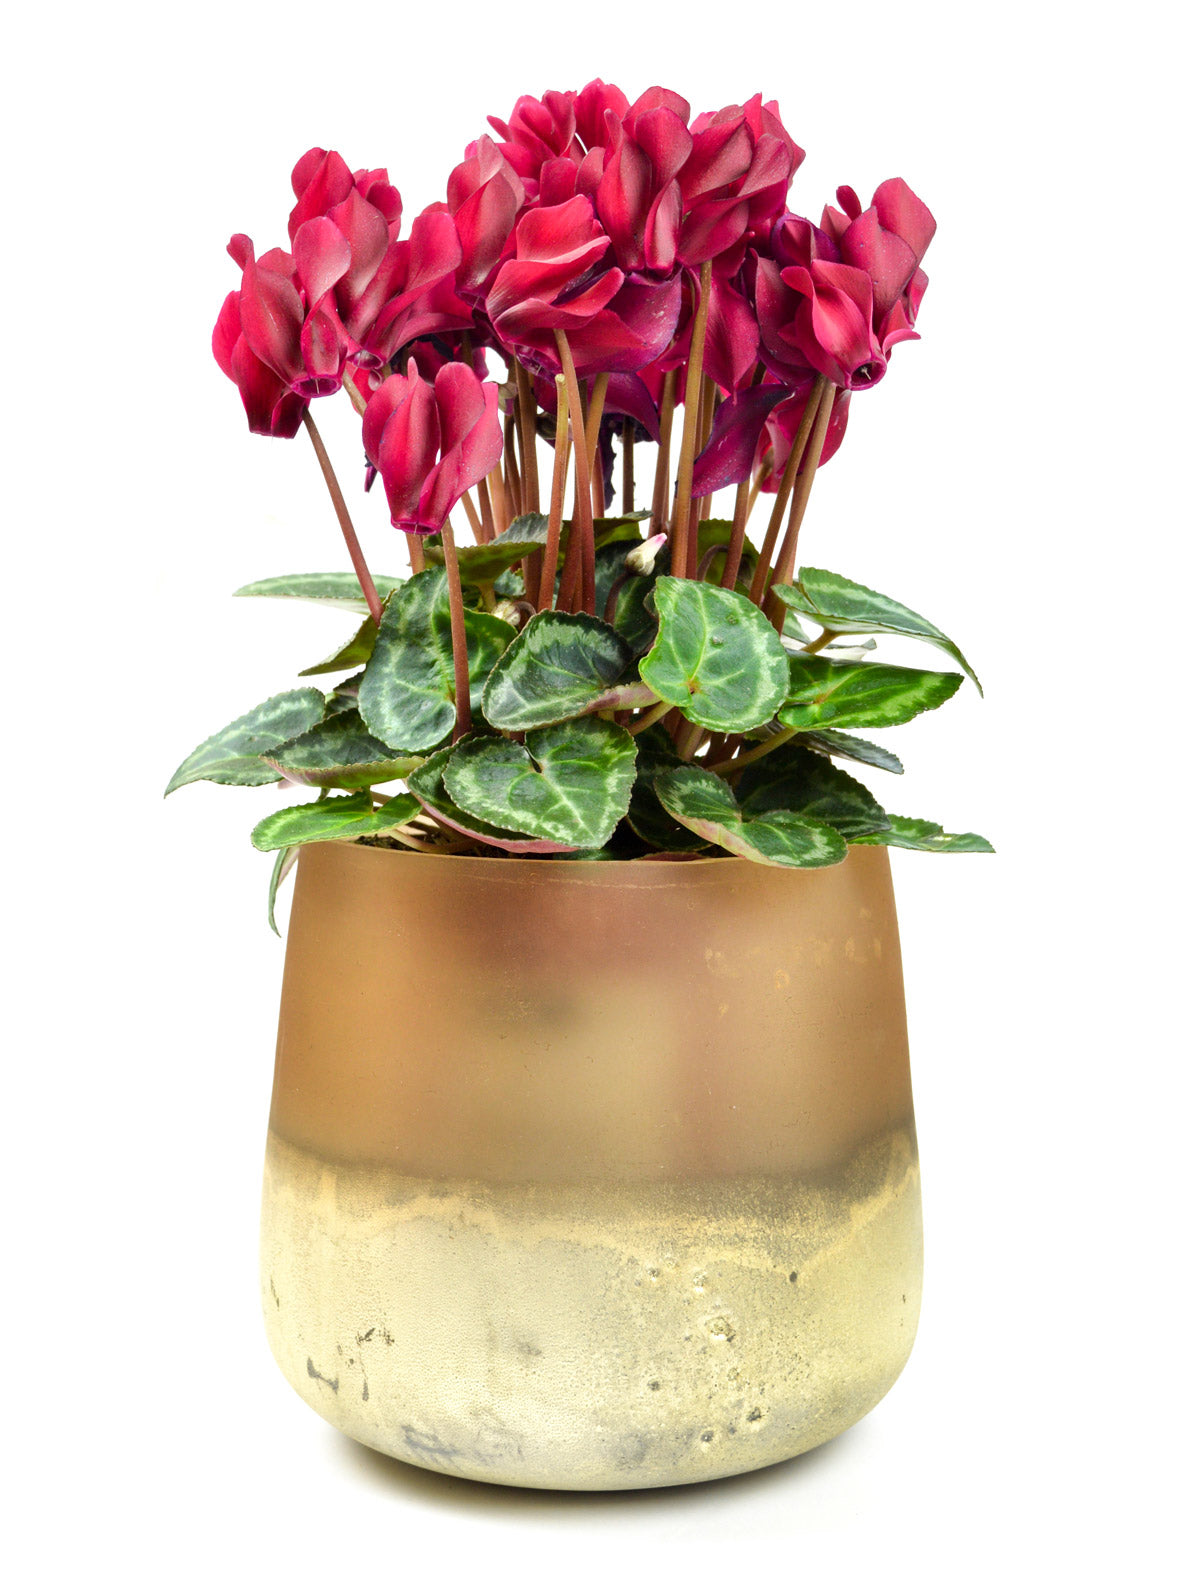 Flower vase Barbara table vase glass vase decorative vase flower pot plant pot